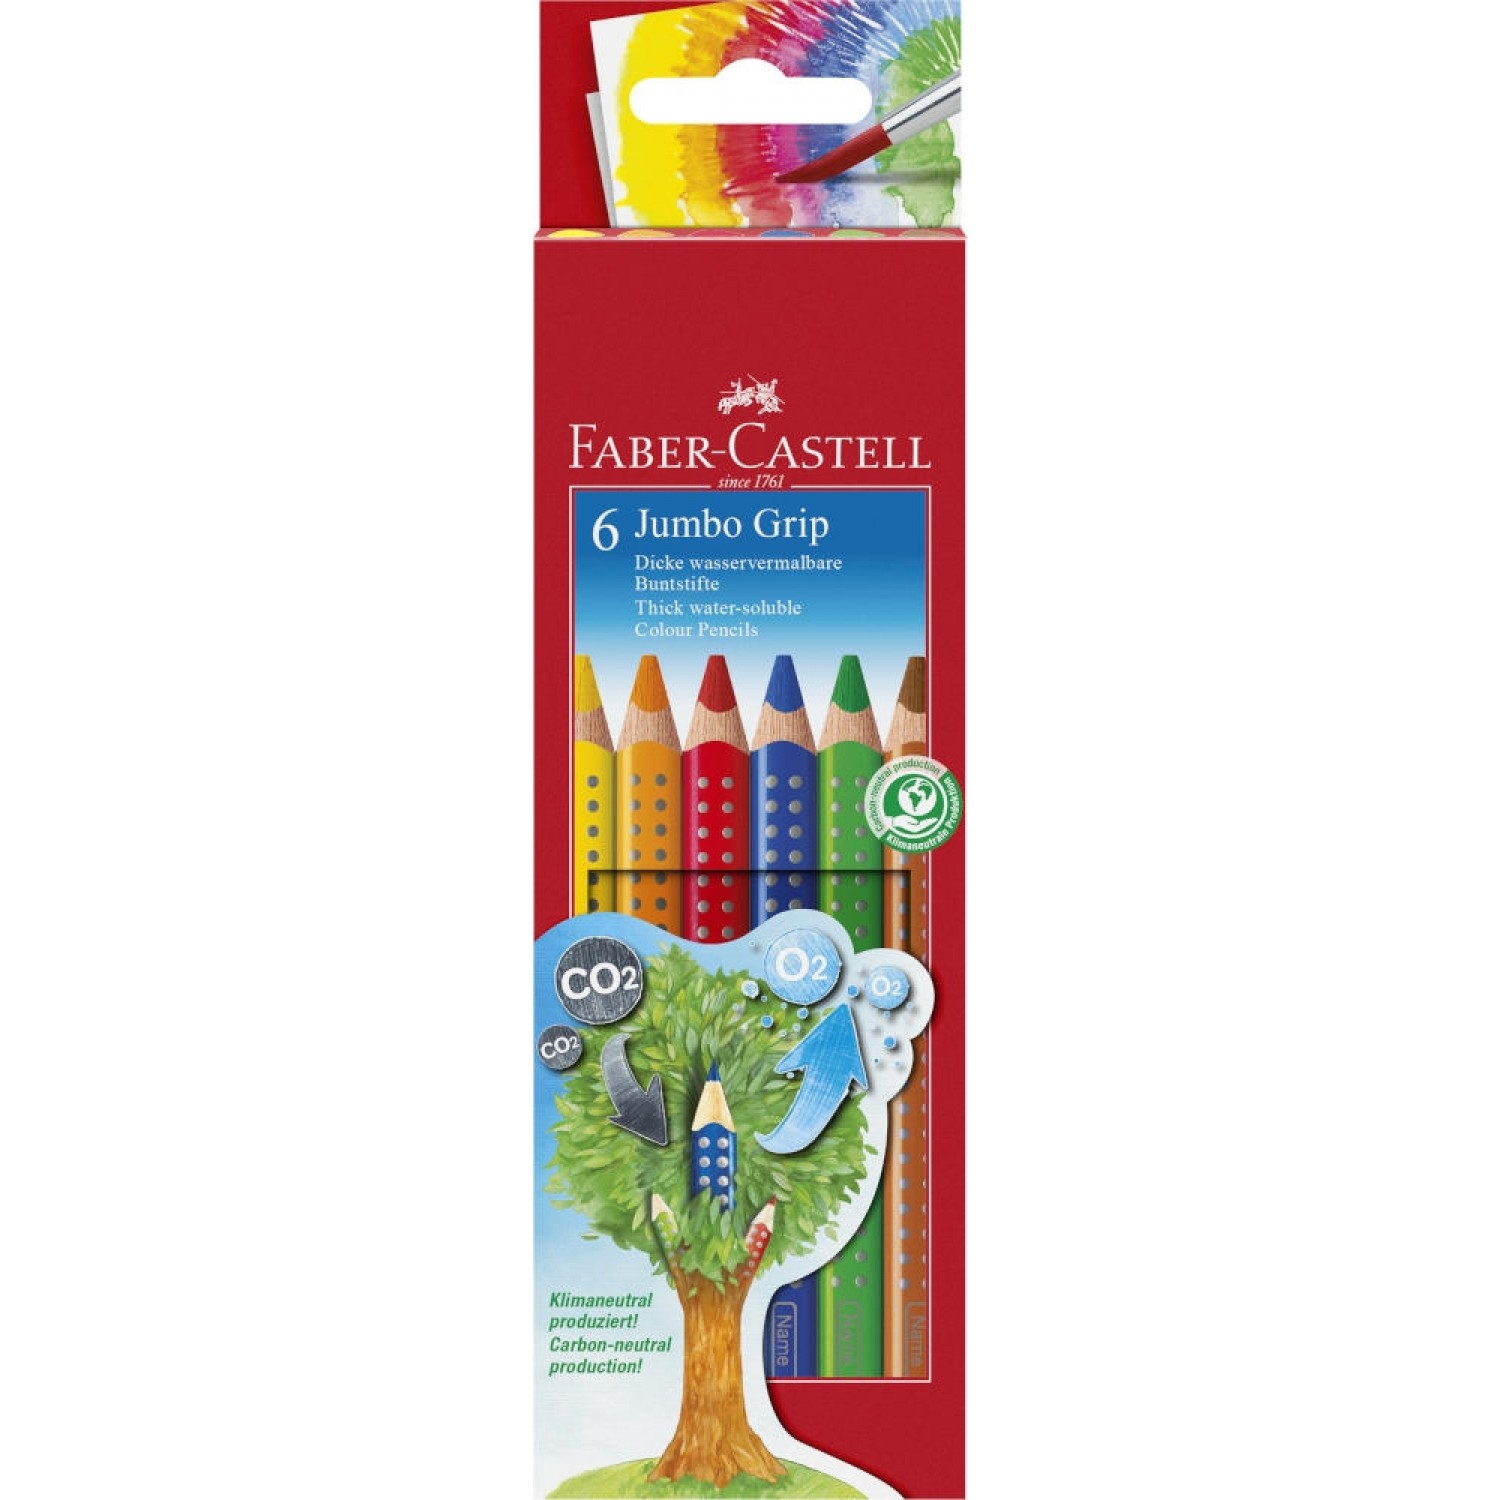 Faber-Castell Jumbo Grip Crayon - 6 eco pencils